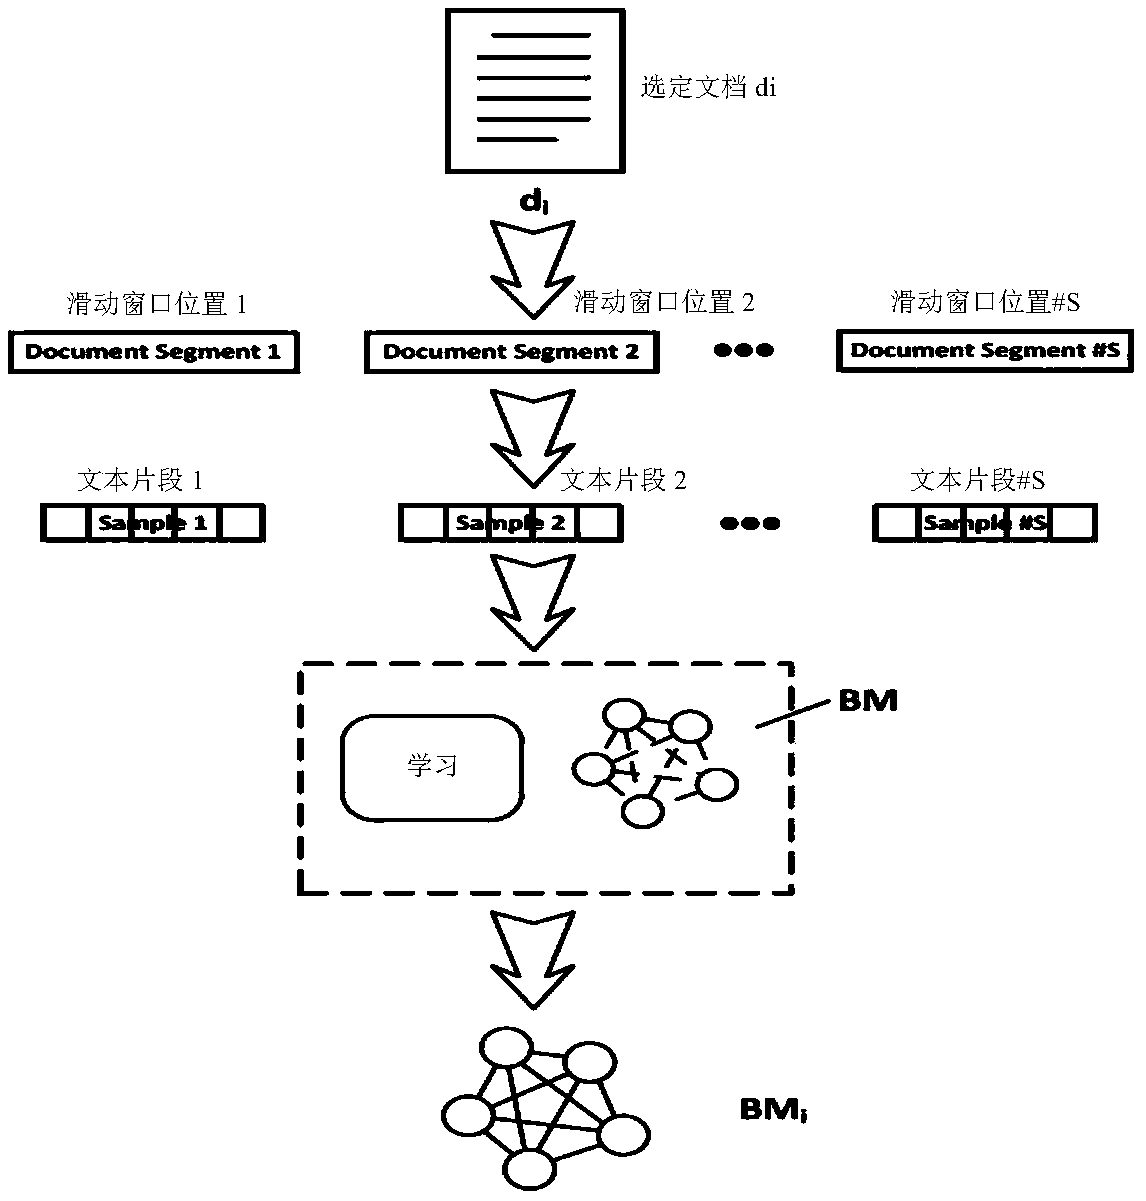 Document Boltzmann machine construction optimization method and device for document query